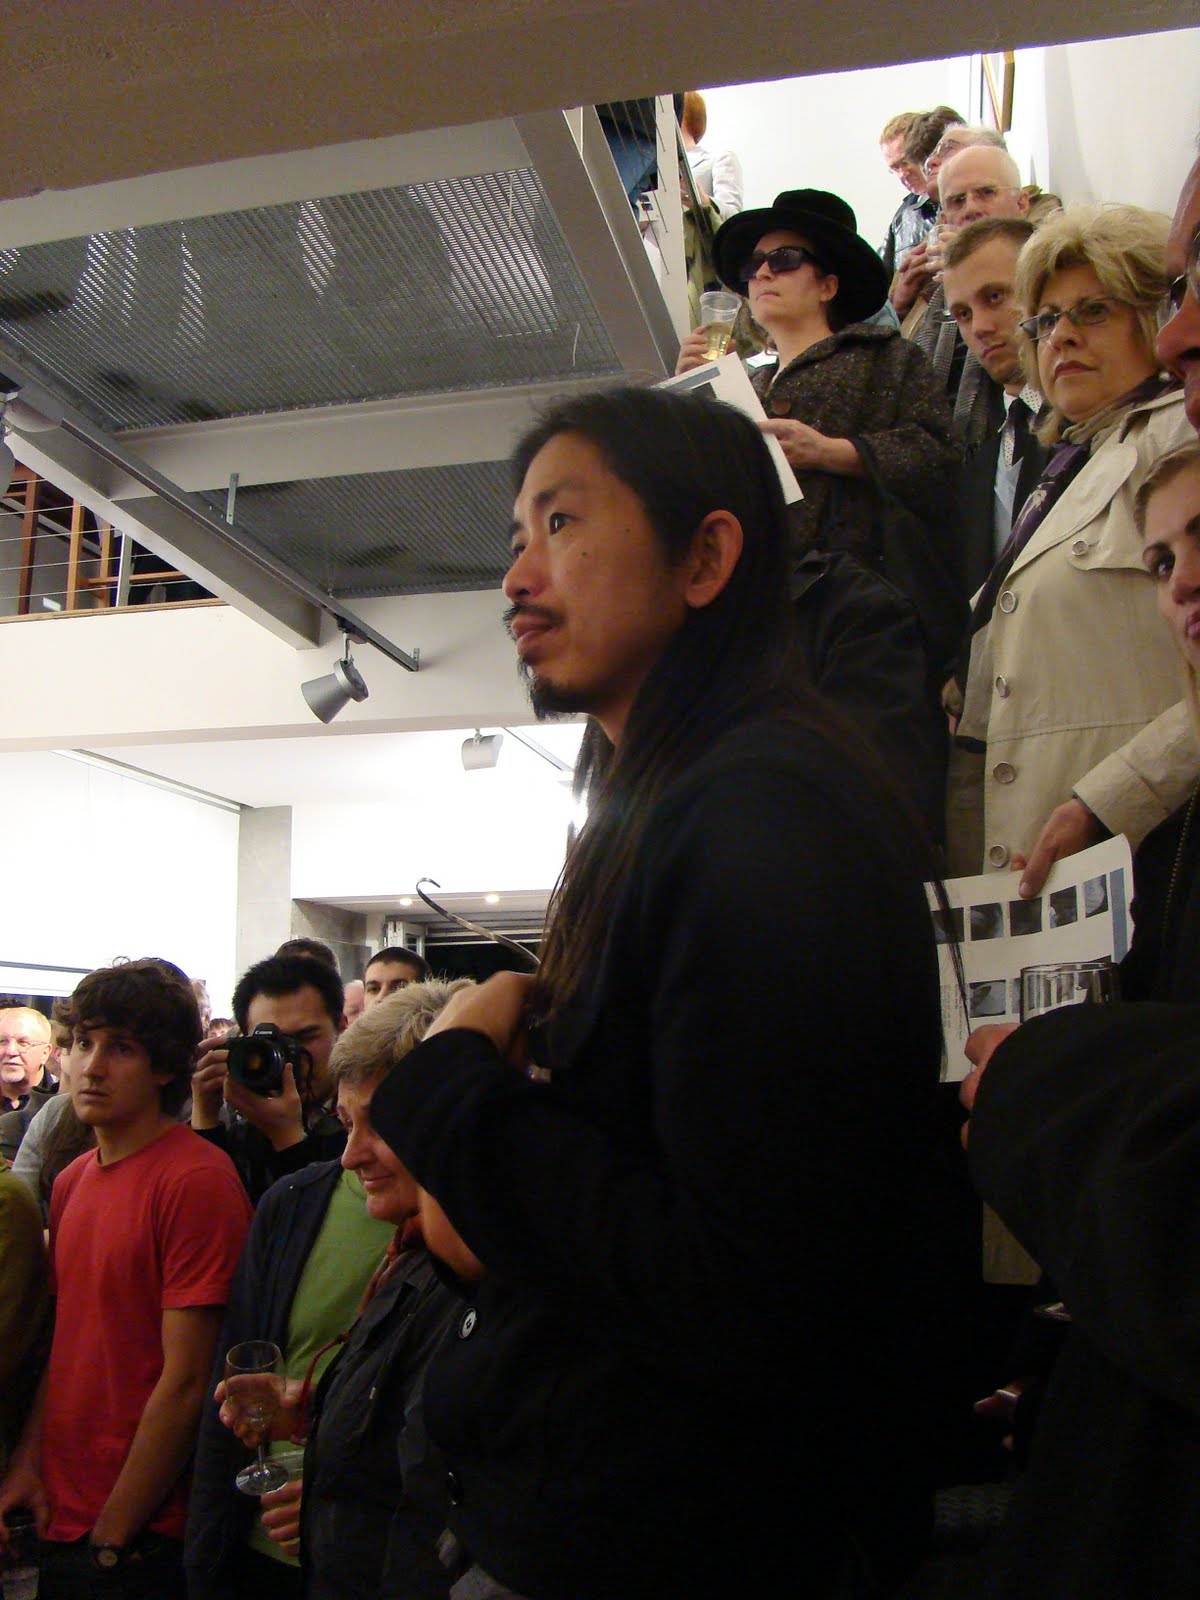 [Designer+Akira+Isogawa+waiting+to+open+Luke+Hardy+exhibition+at+Meyer+Gallery+Photograph+by+Robert+McFarlane.jpg]